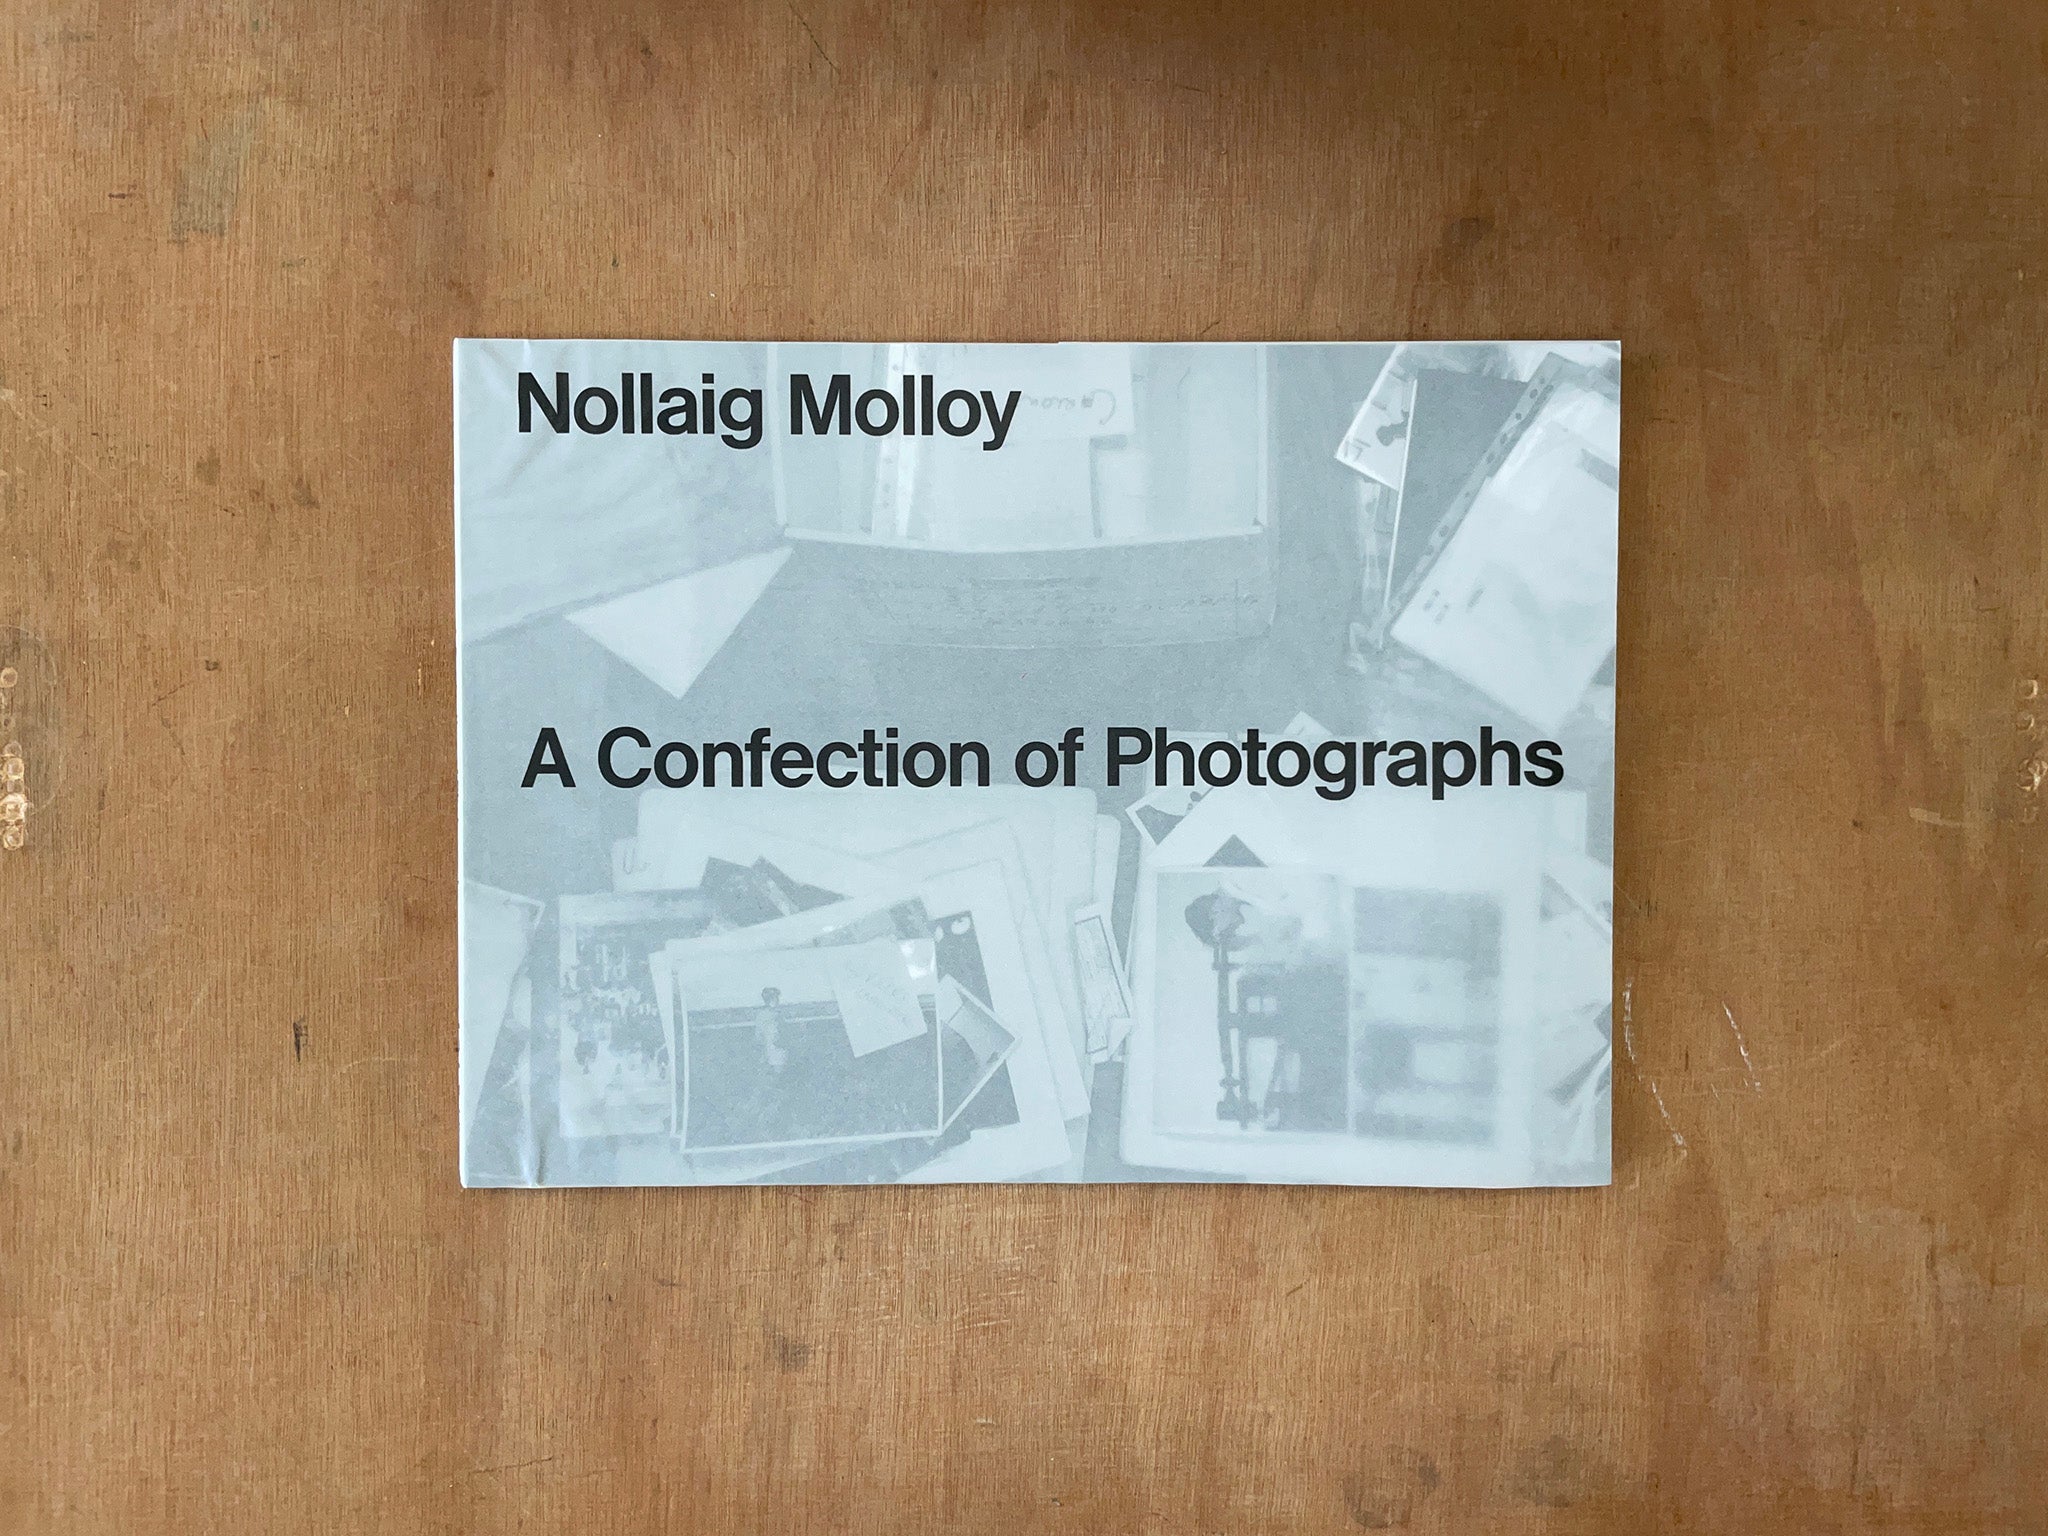 A CONFECTION OF PHOTOGRAPHS by Nollaig Molloy